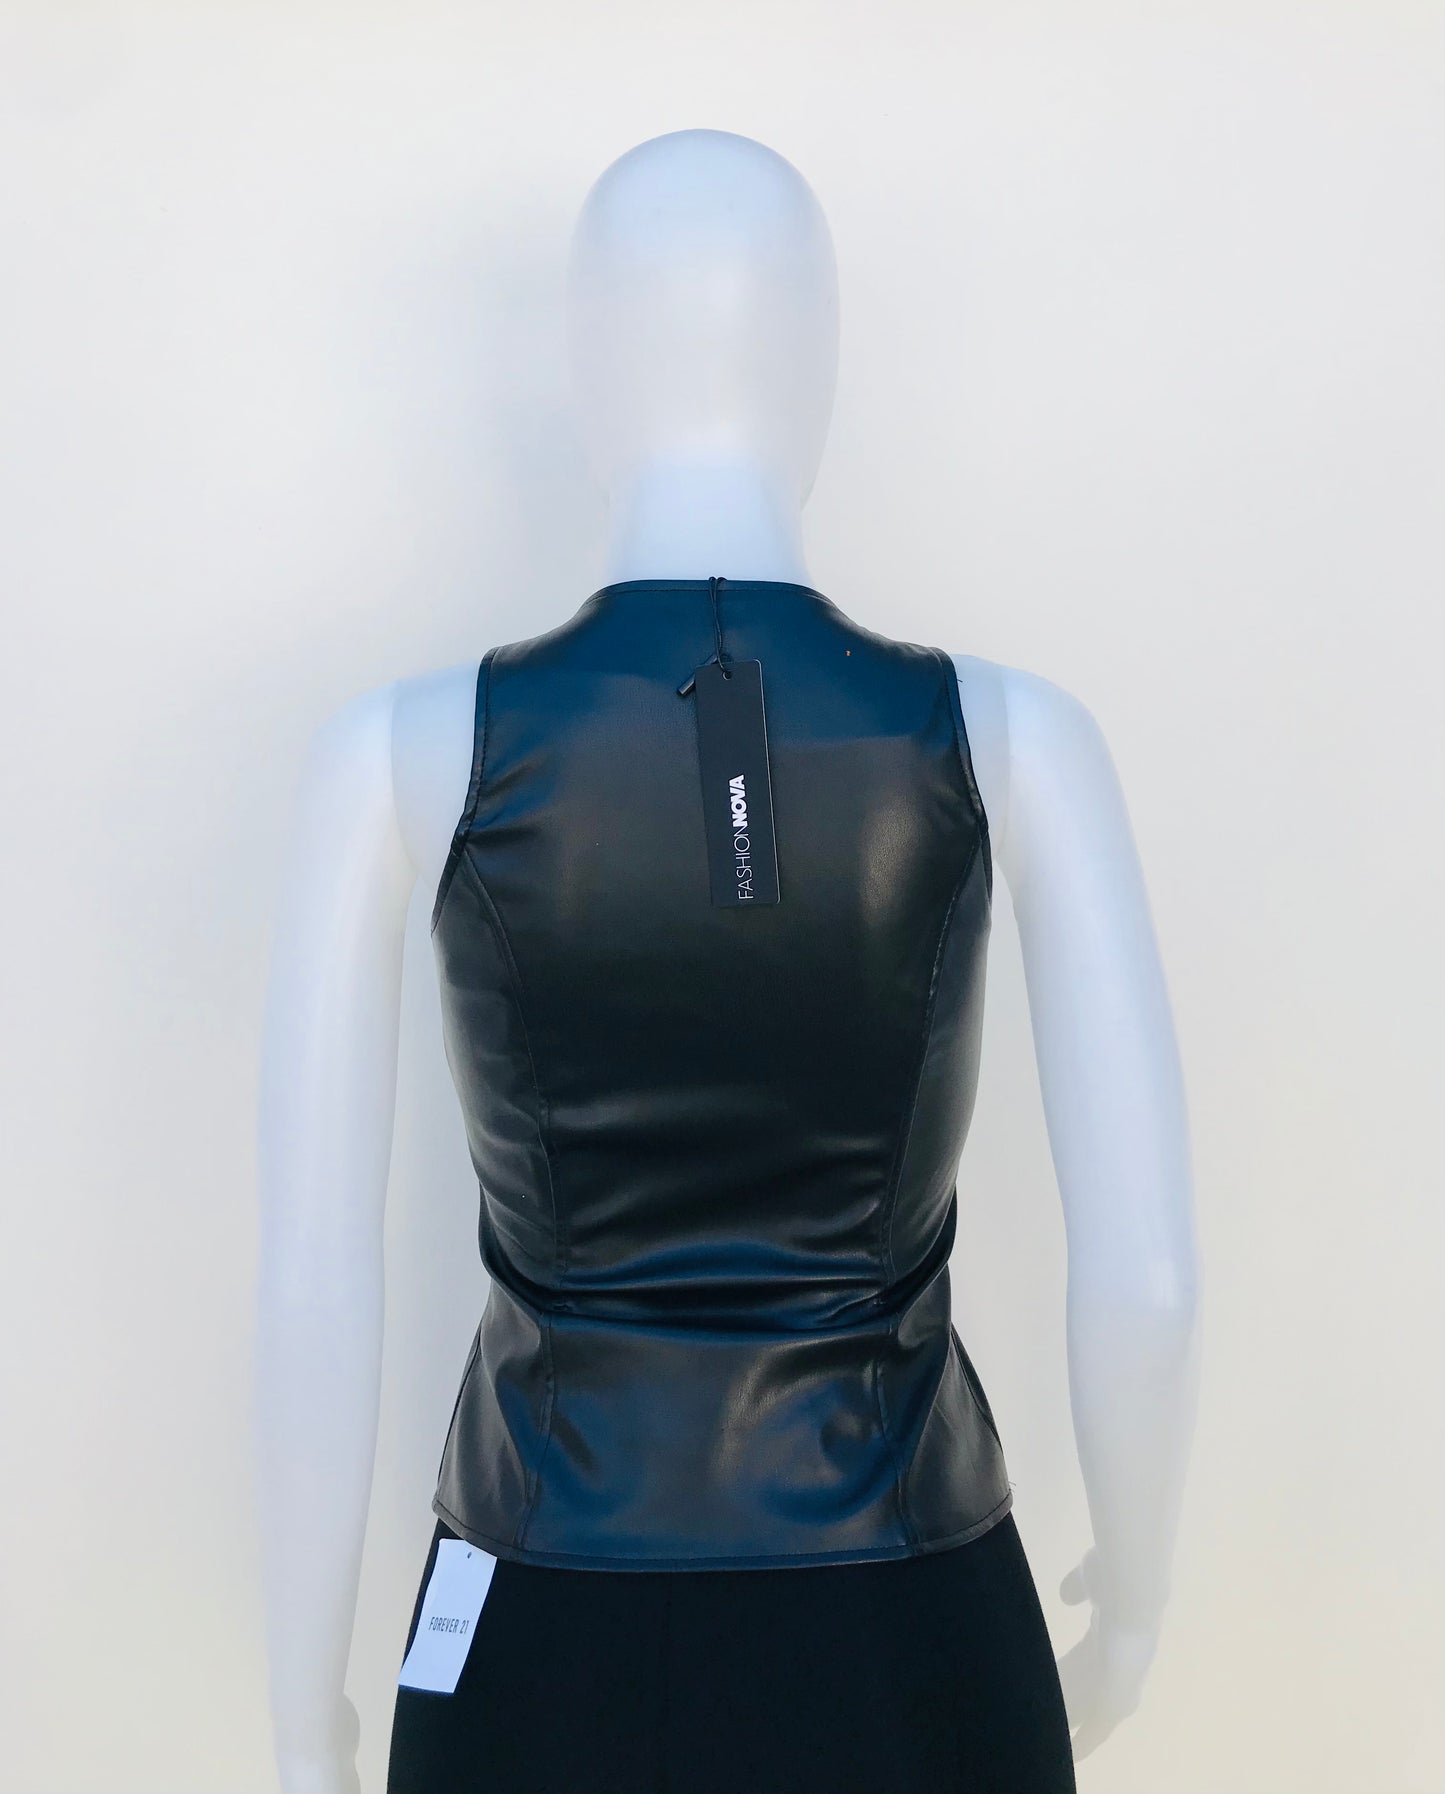 Top/ blusa en leather FASHION NOVA Original, negra descubierta en el centro con lazos cruzados.